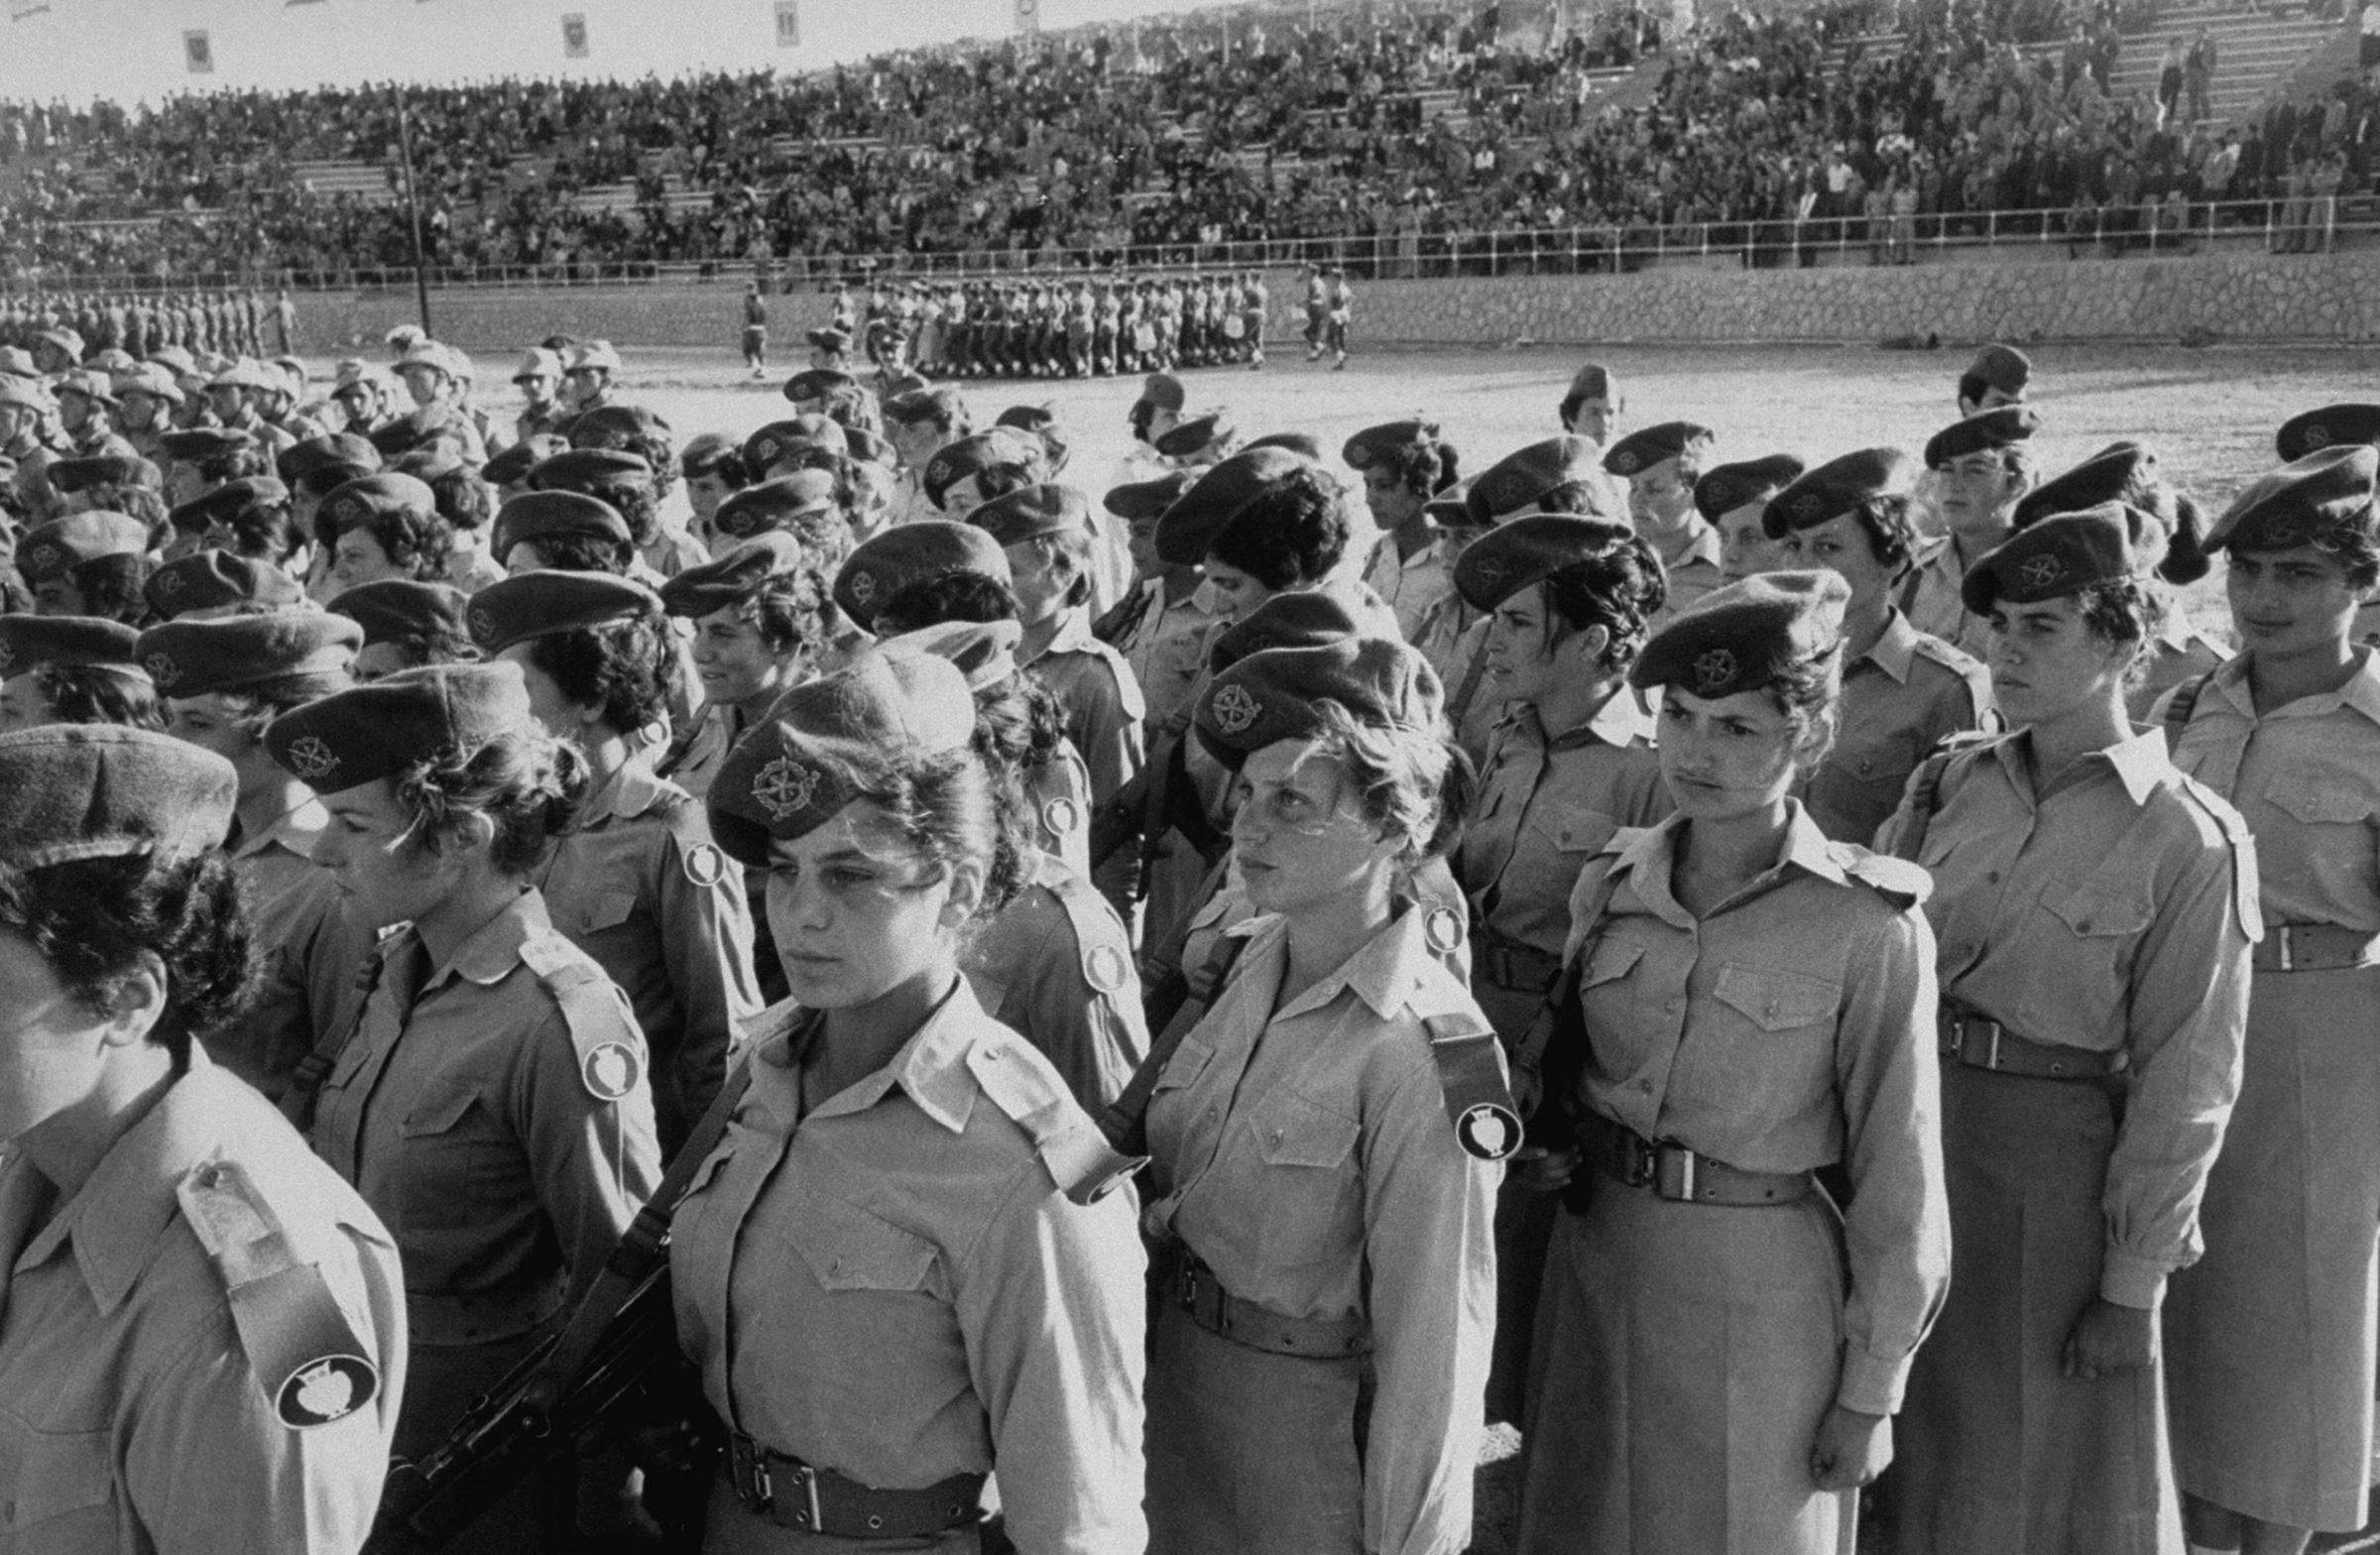 Israeli women's Army unit parading in Jerusalem carrying burp guns, on the 10th anniversary of Israeli nationhood,1956.